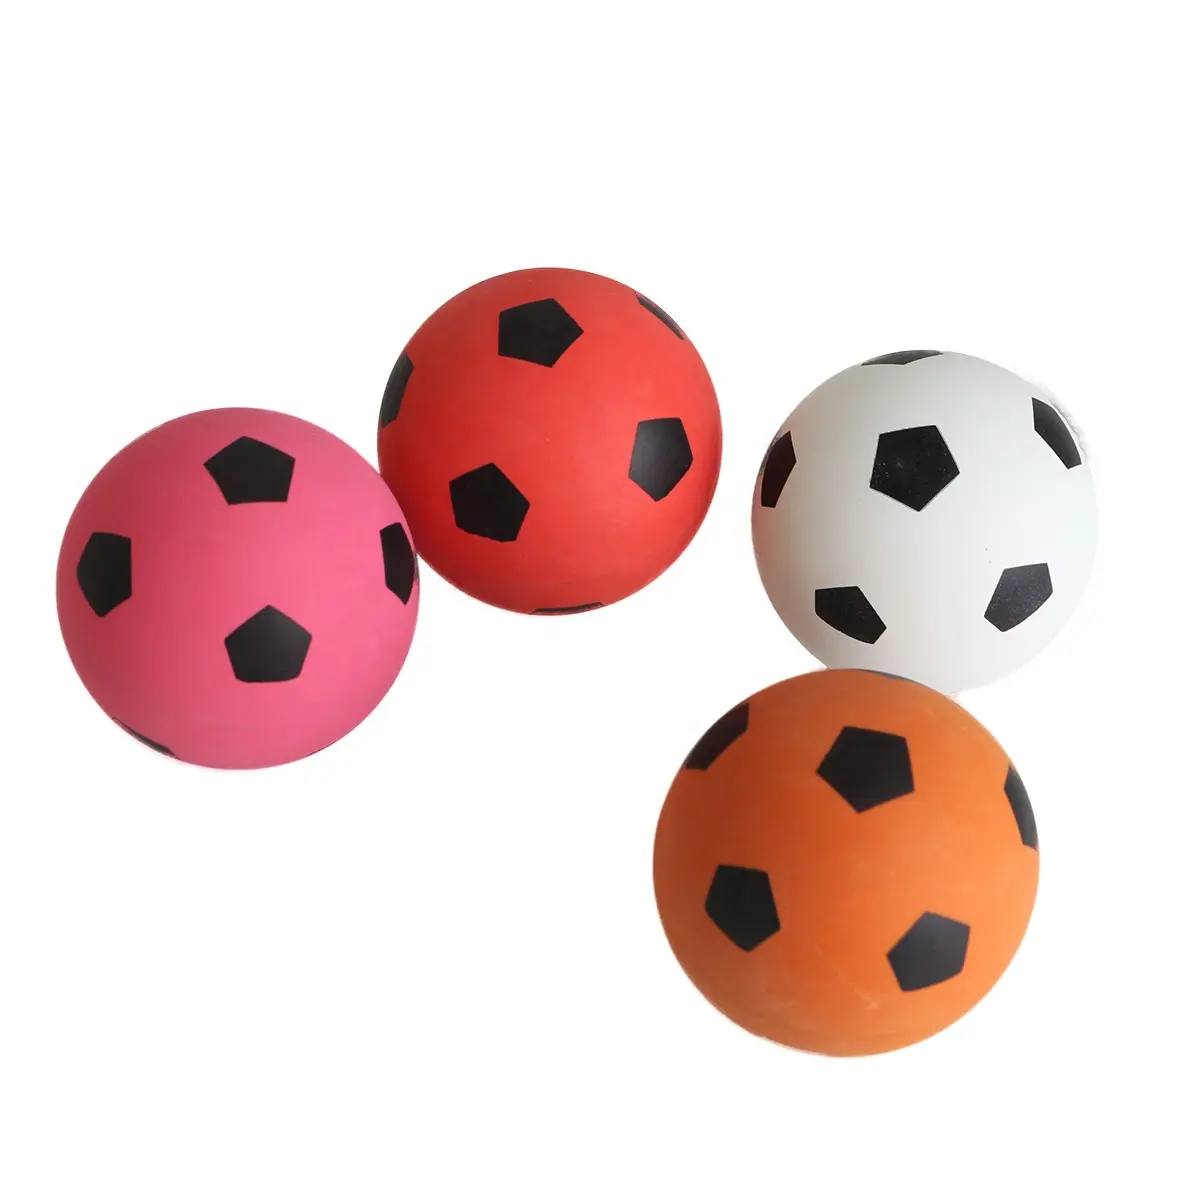 Hollow rubber Bounce Balls 60mm bounce squash ball, mini basketball, football, beach ball of Customs promotional